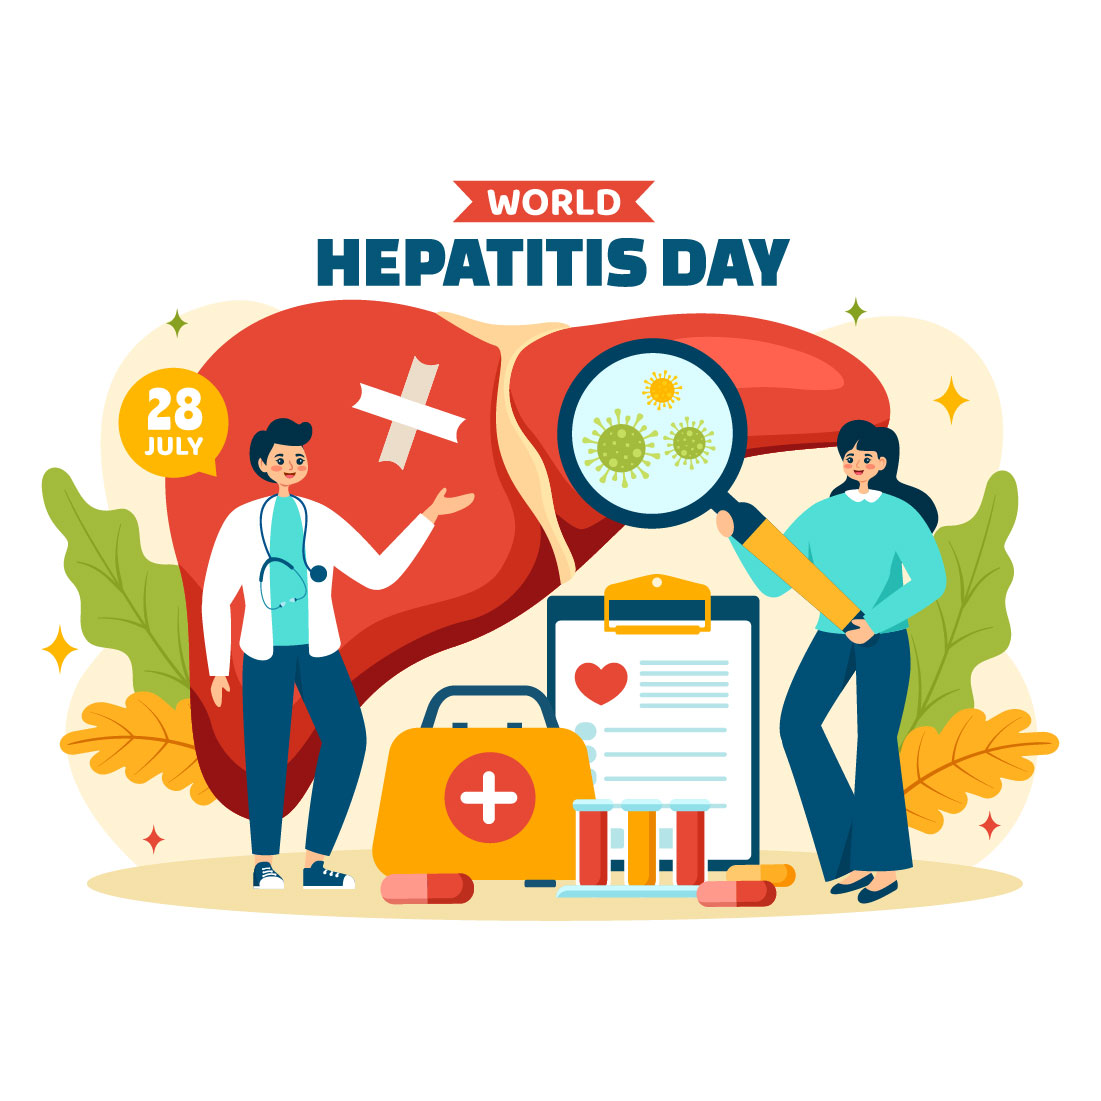 12 World Hepatitis Day Illustration cover image.